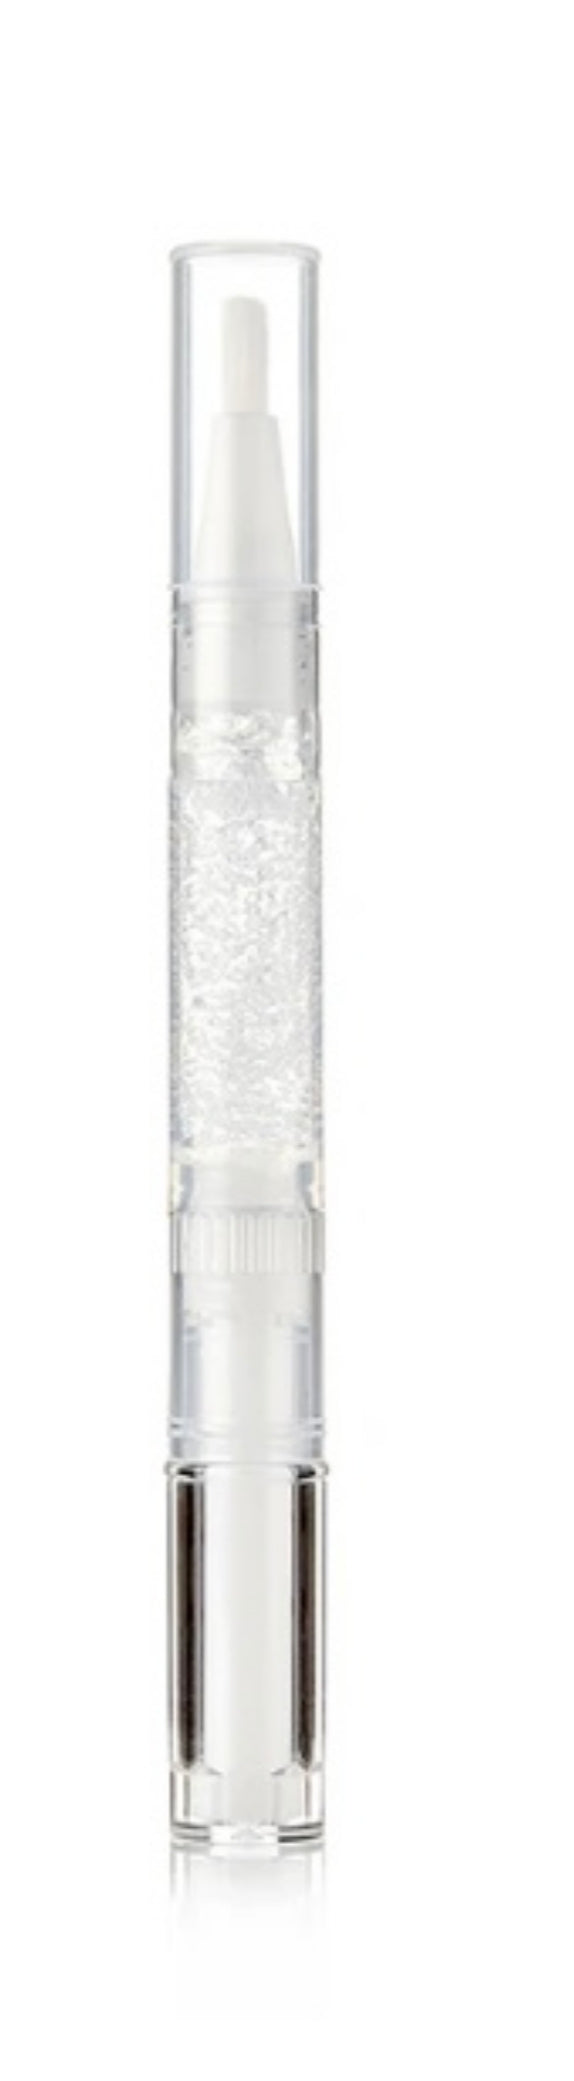 100 units-Teeth whitening clear gel pens. Bulk. USA 16%hp max strength gel.